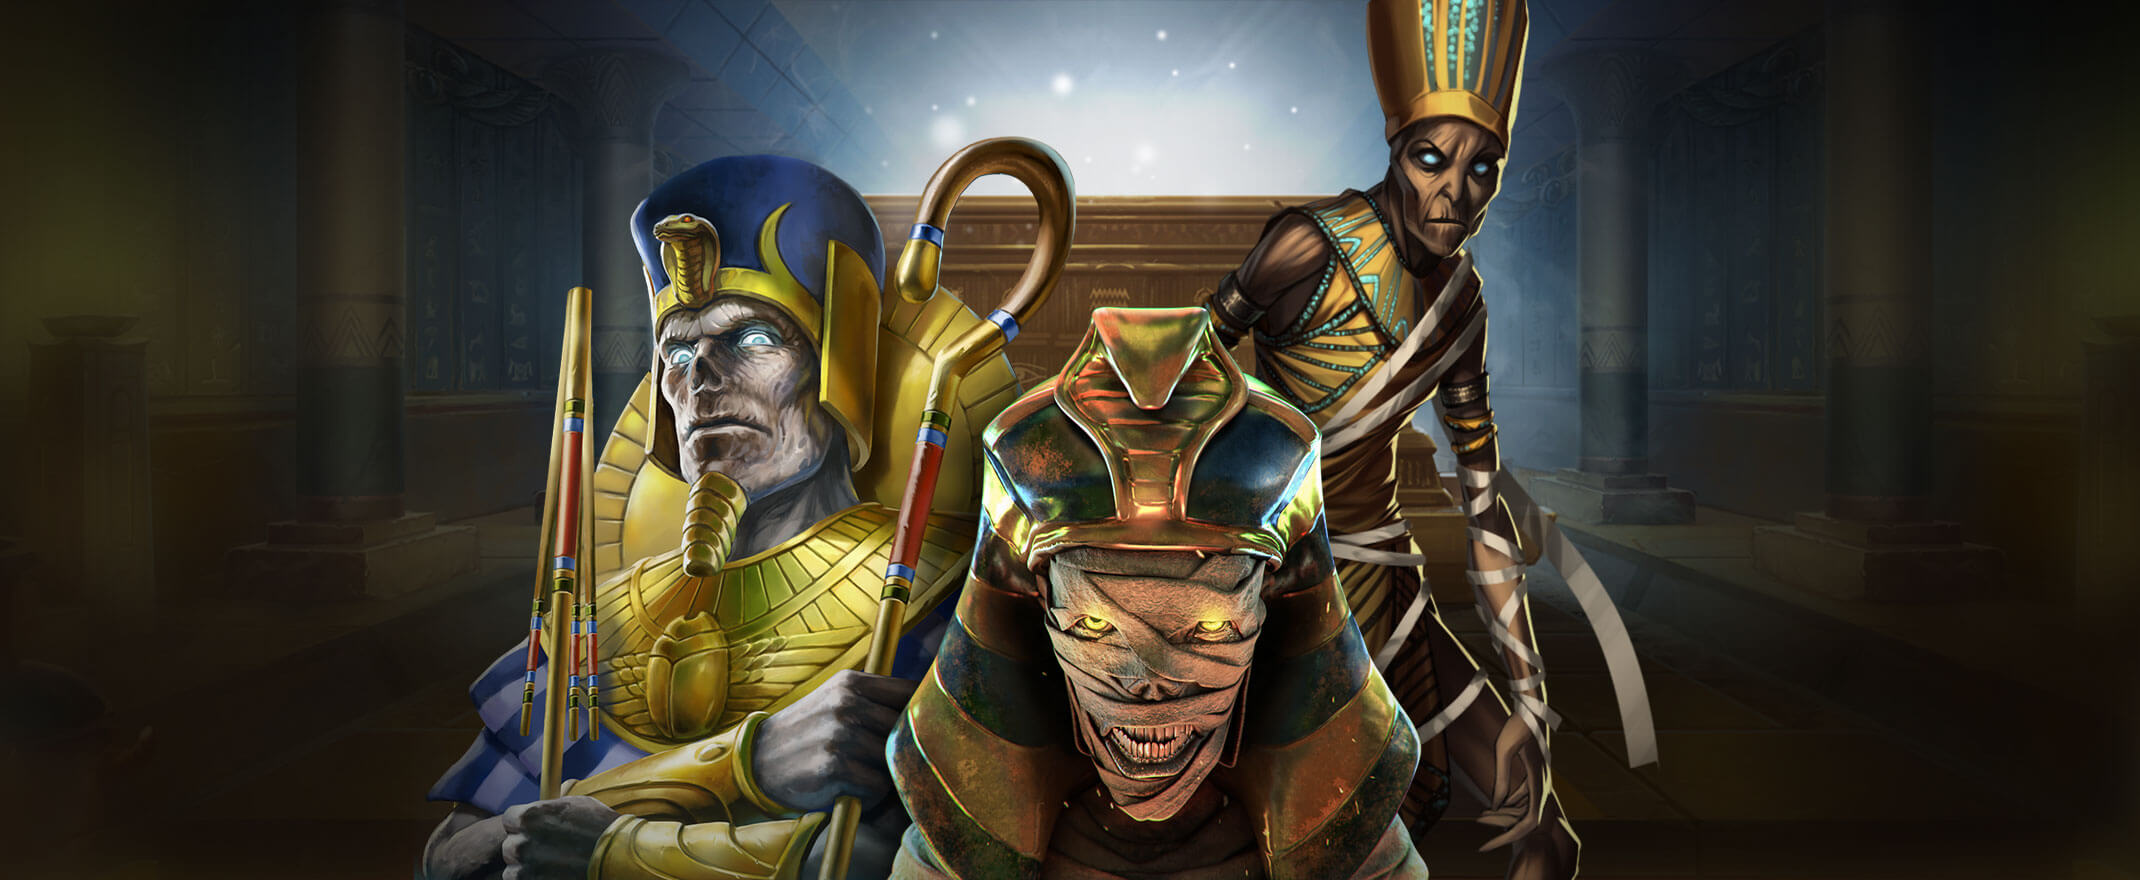 Most popular slot themes - Ancient Egypt